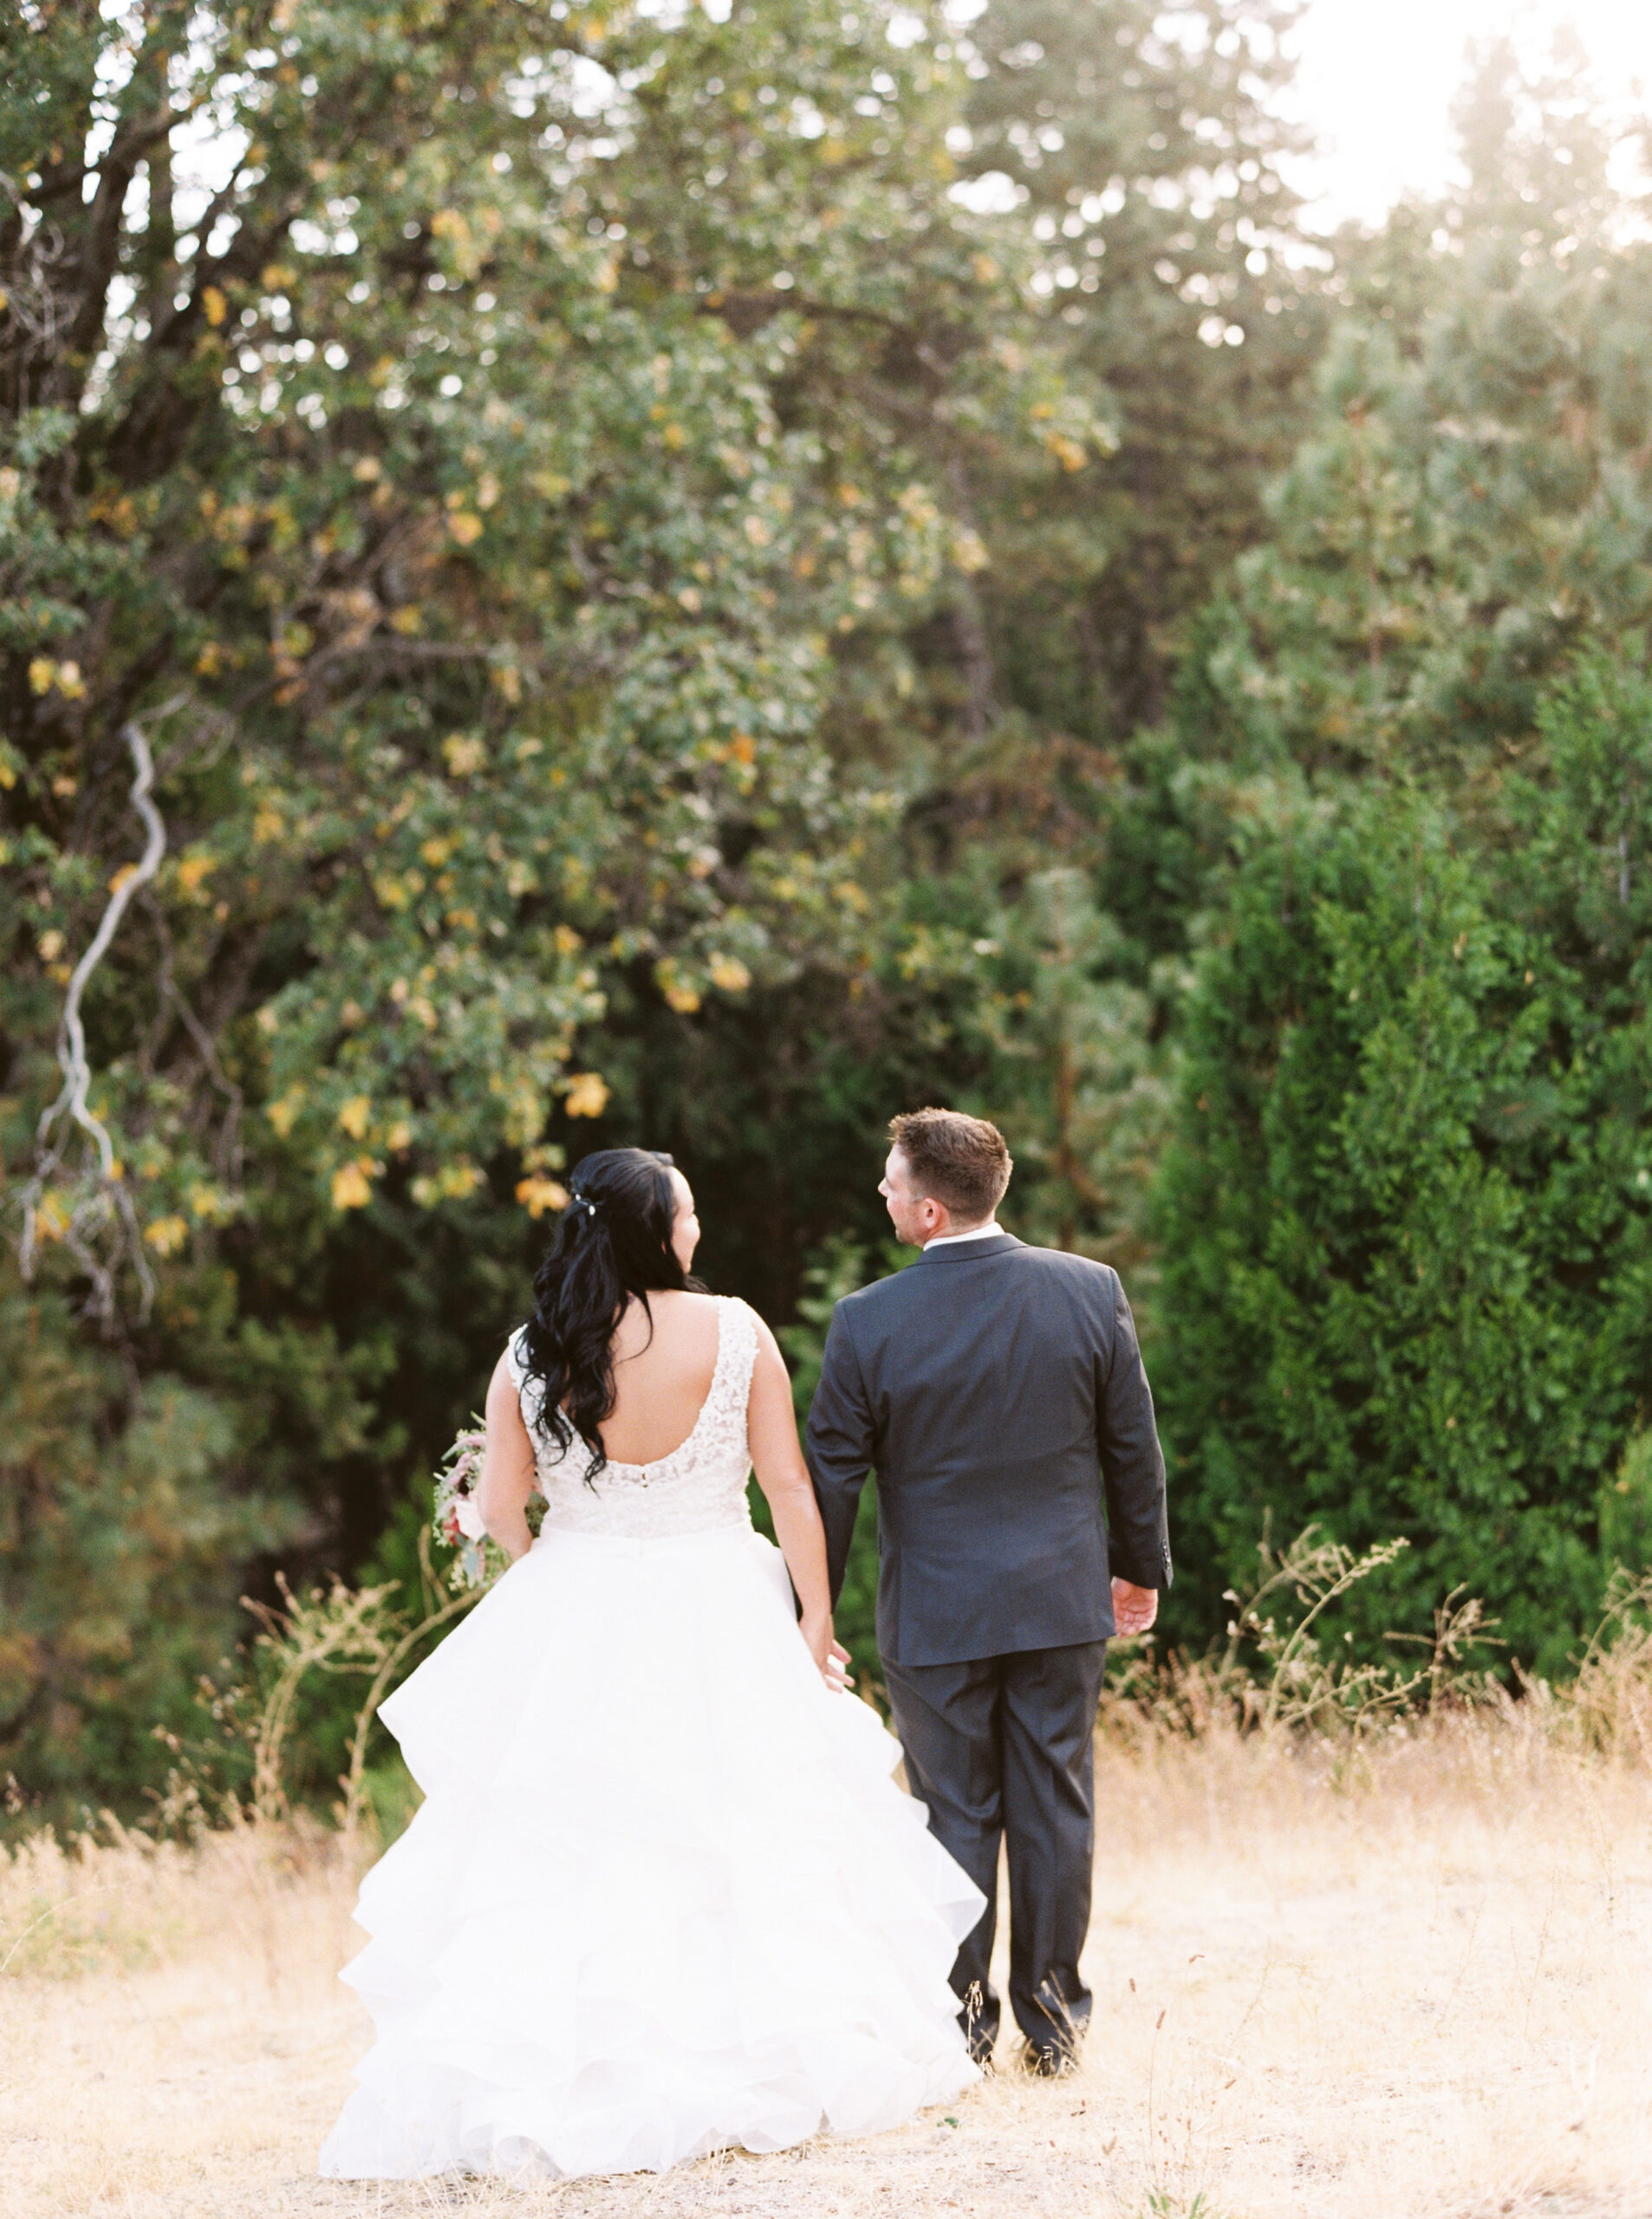 Tenaya-lodge-wedding-at-yosemite-national-park-california-13.jpg